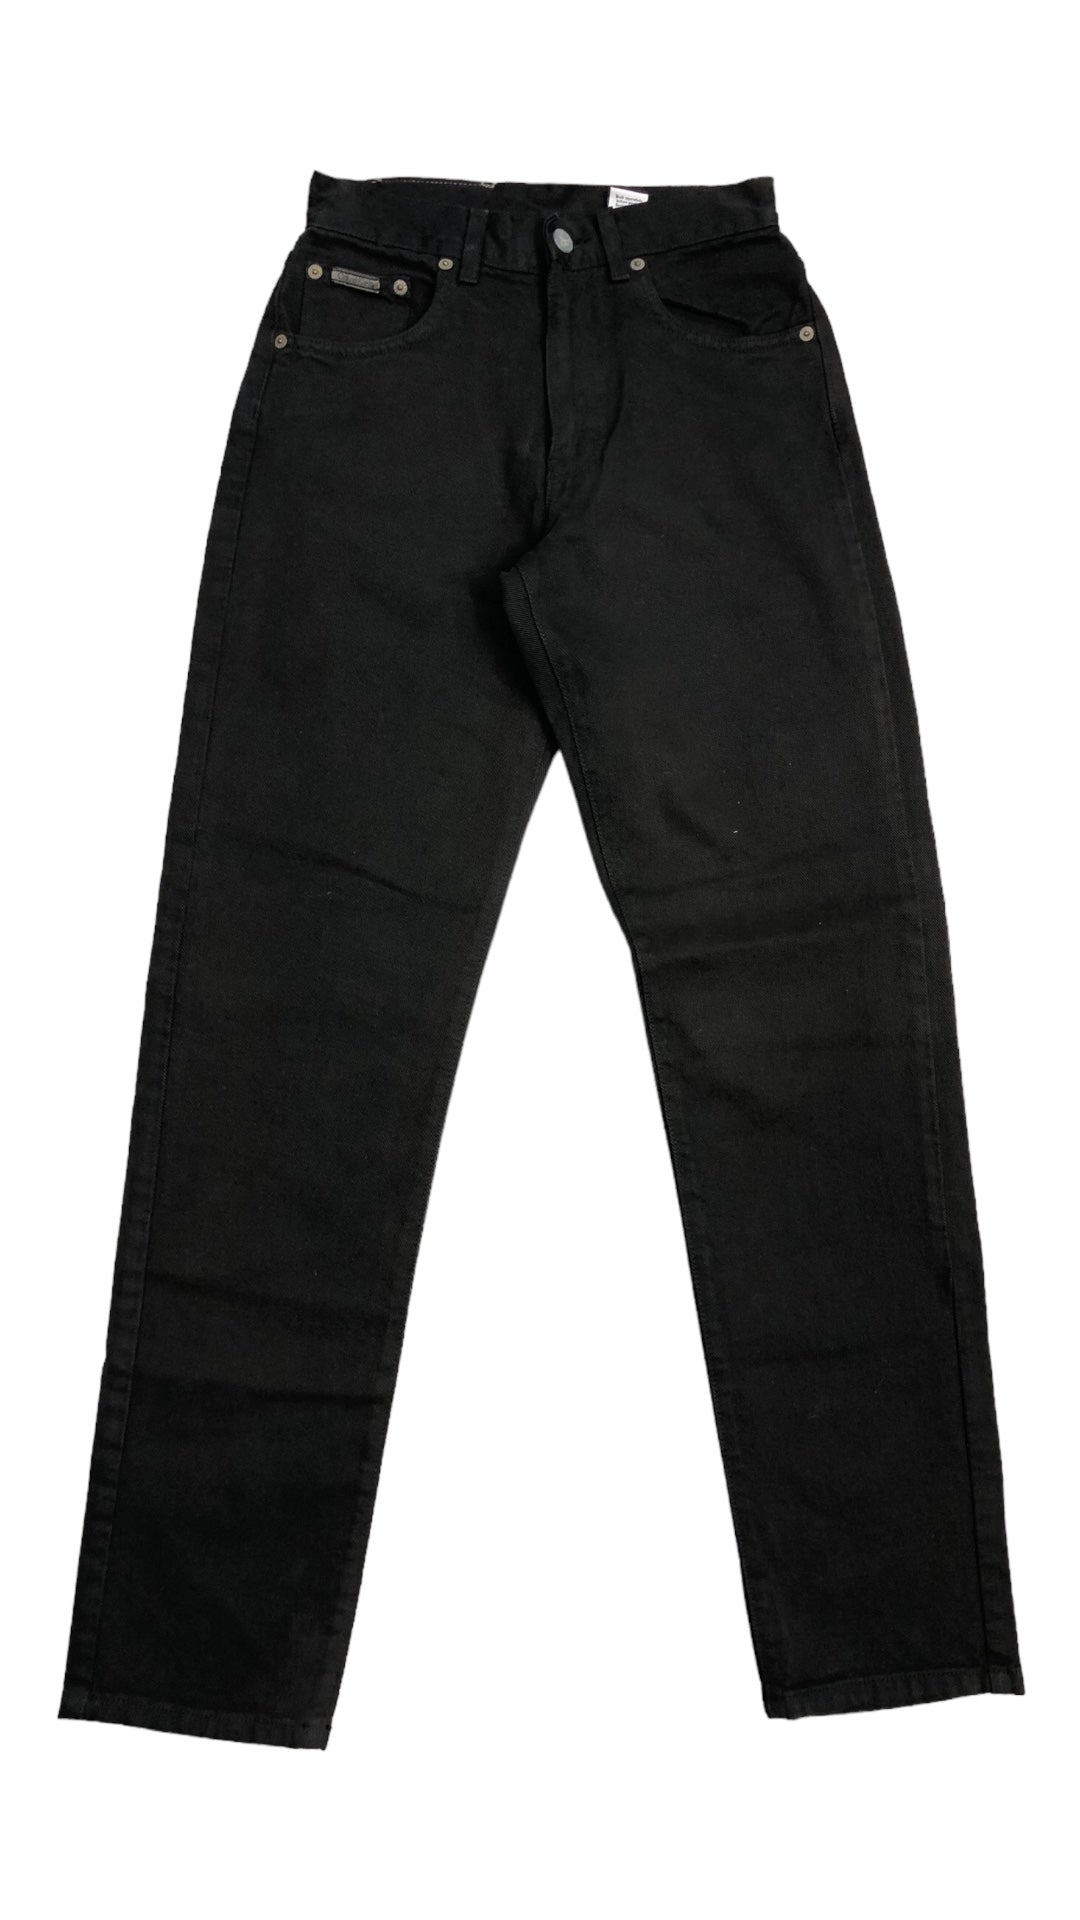 VTG Black Calvin Klein Jeans Sz 26x32